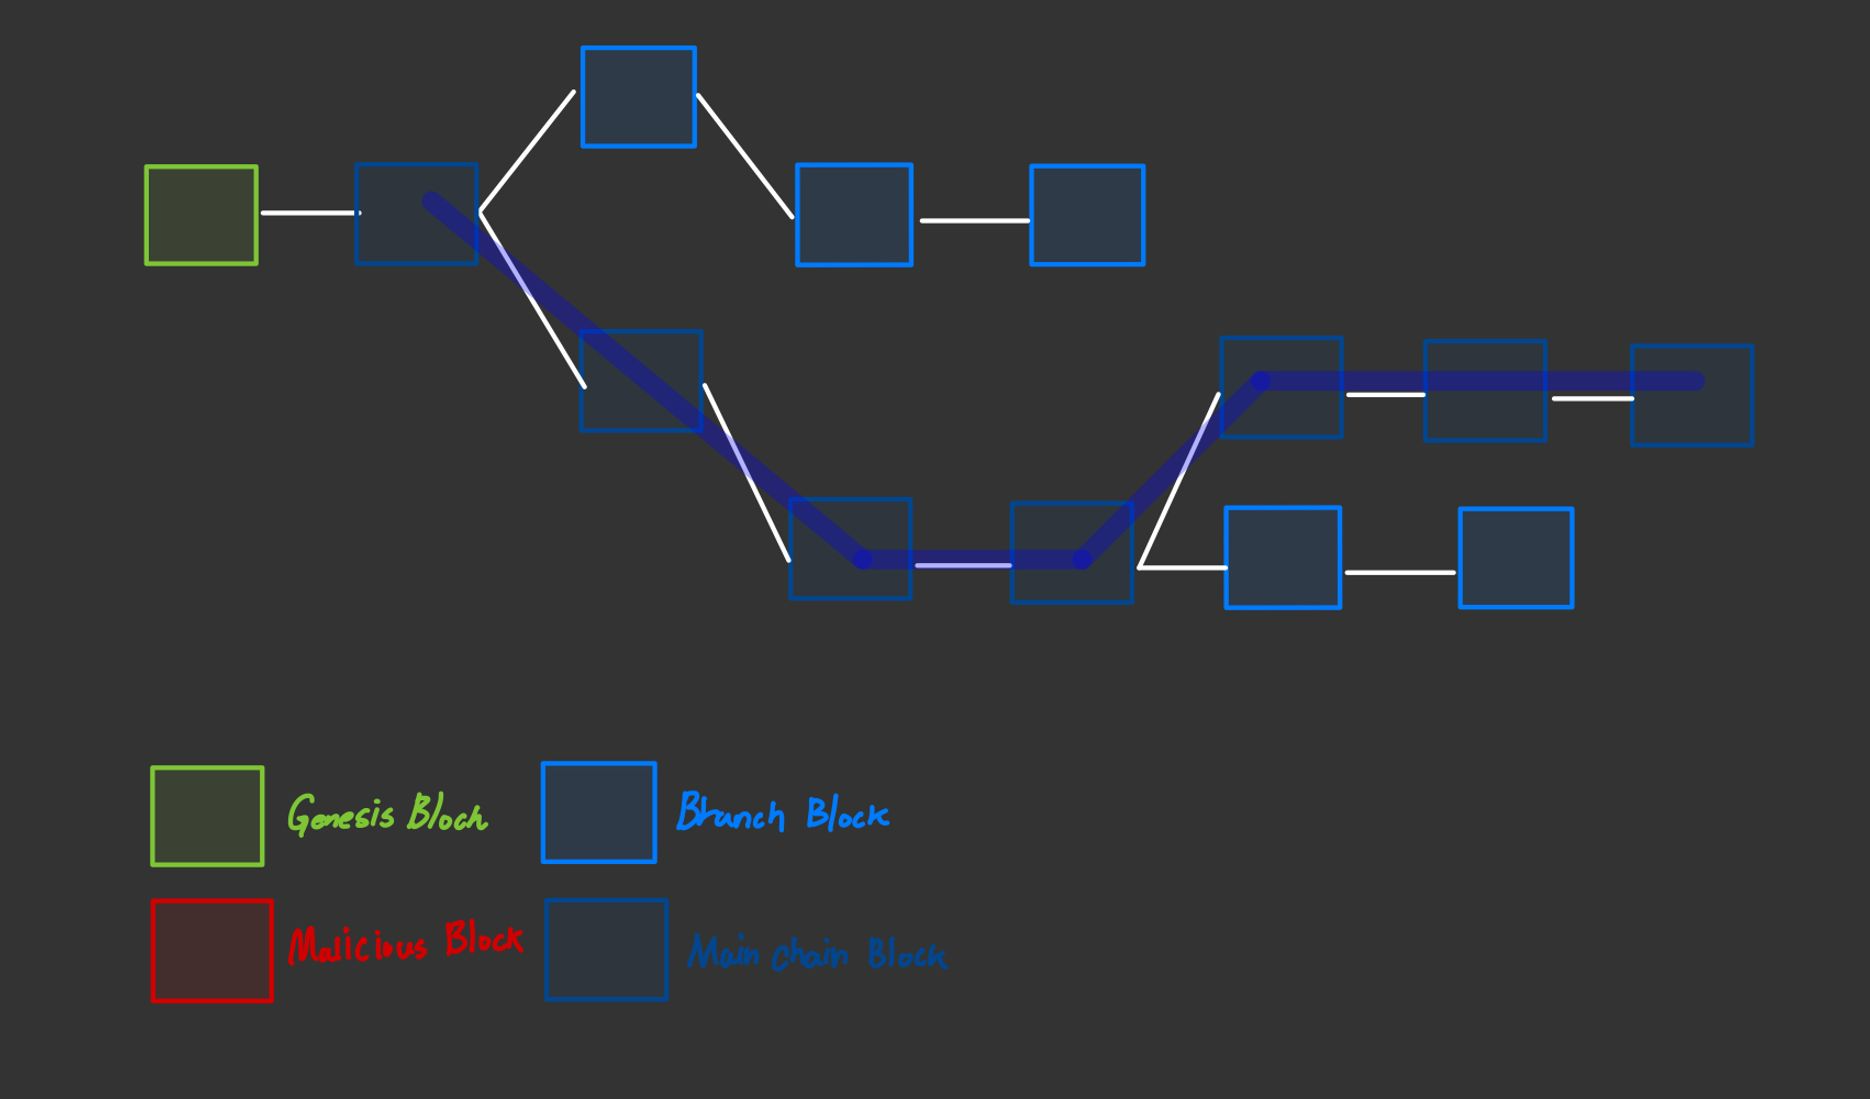 Green: genesis blocks / Light blue: branch blocks / Dark blue: main chain blocks / Red: malicious blocks